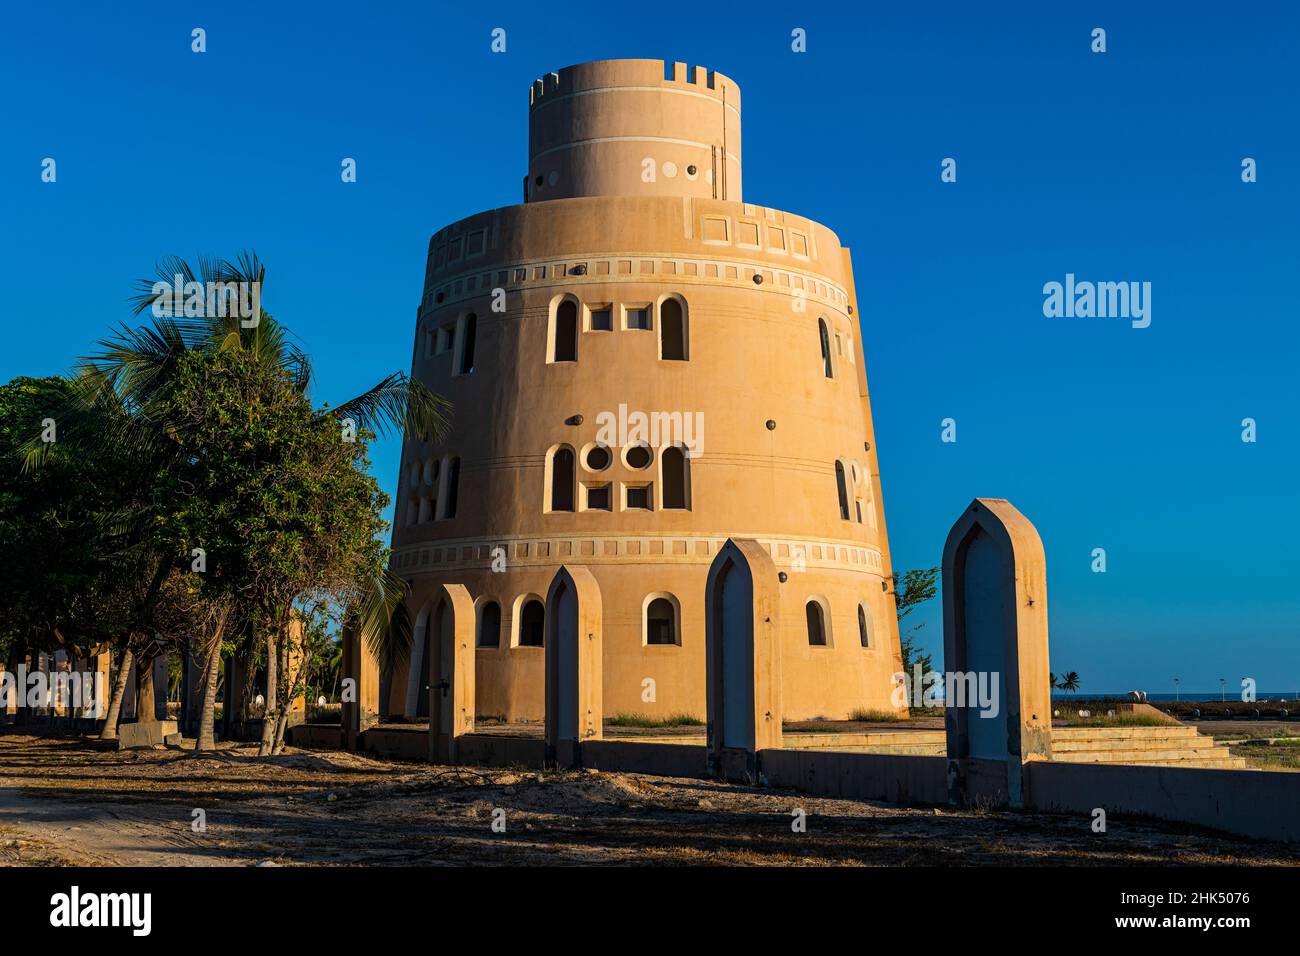 Ricostruita torre di difesa, Mirbat, Salalah, Oman, Medio Oriente Foto Stock